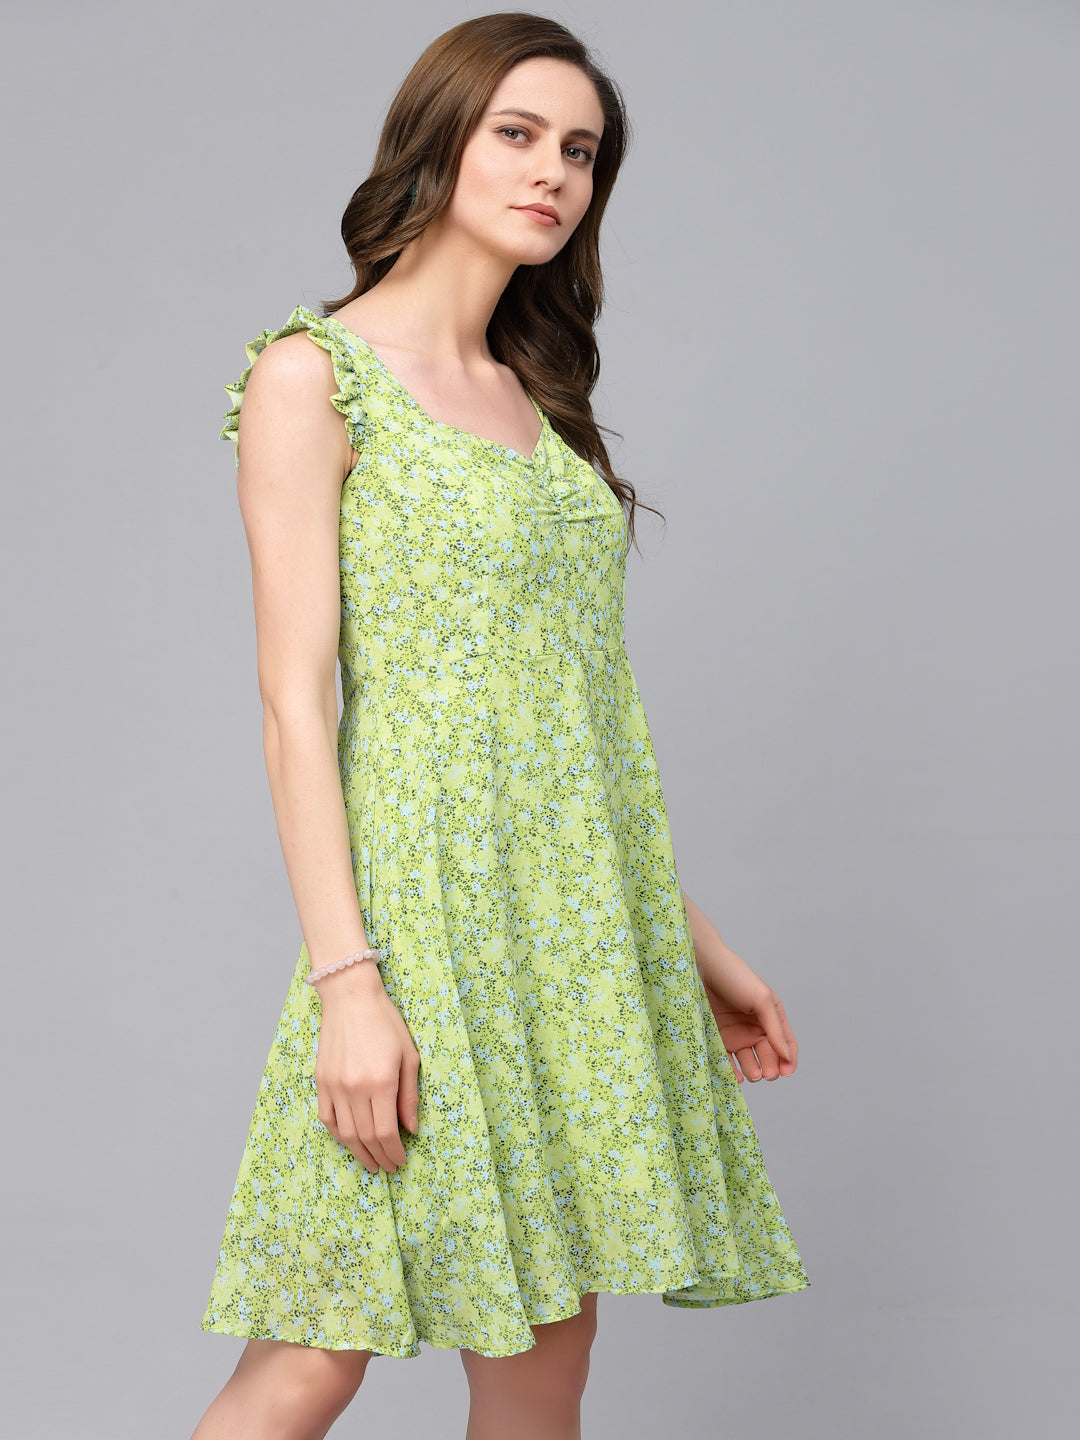 Gipsy Lime Green Synthetics Dress